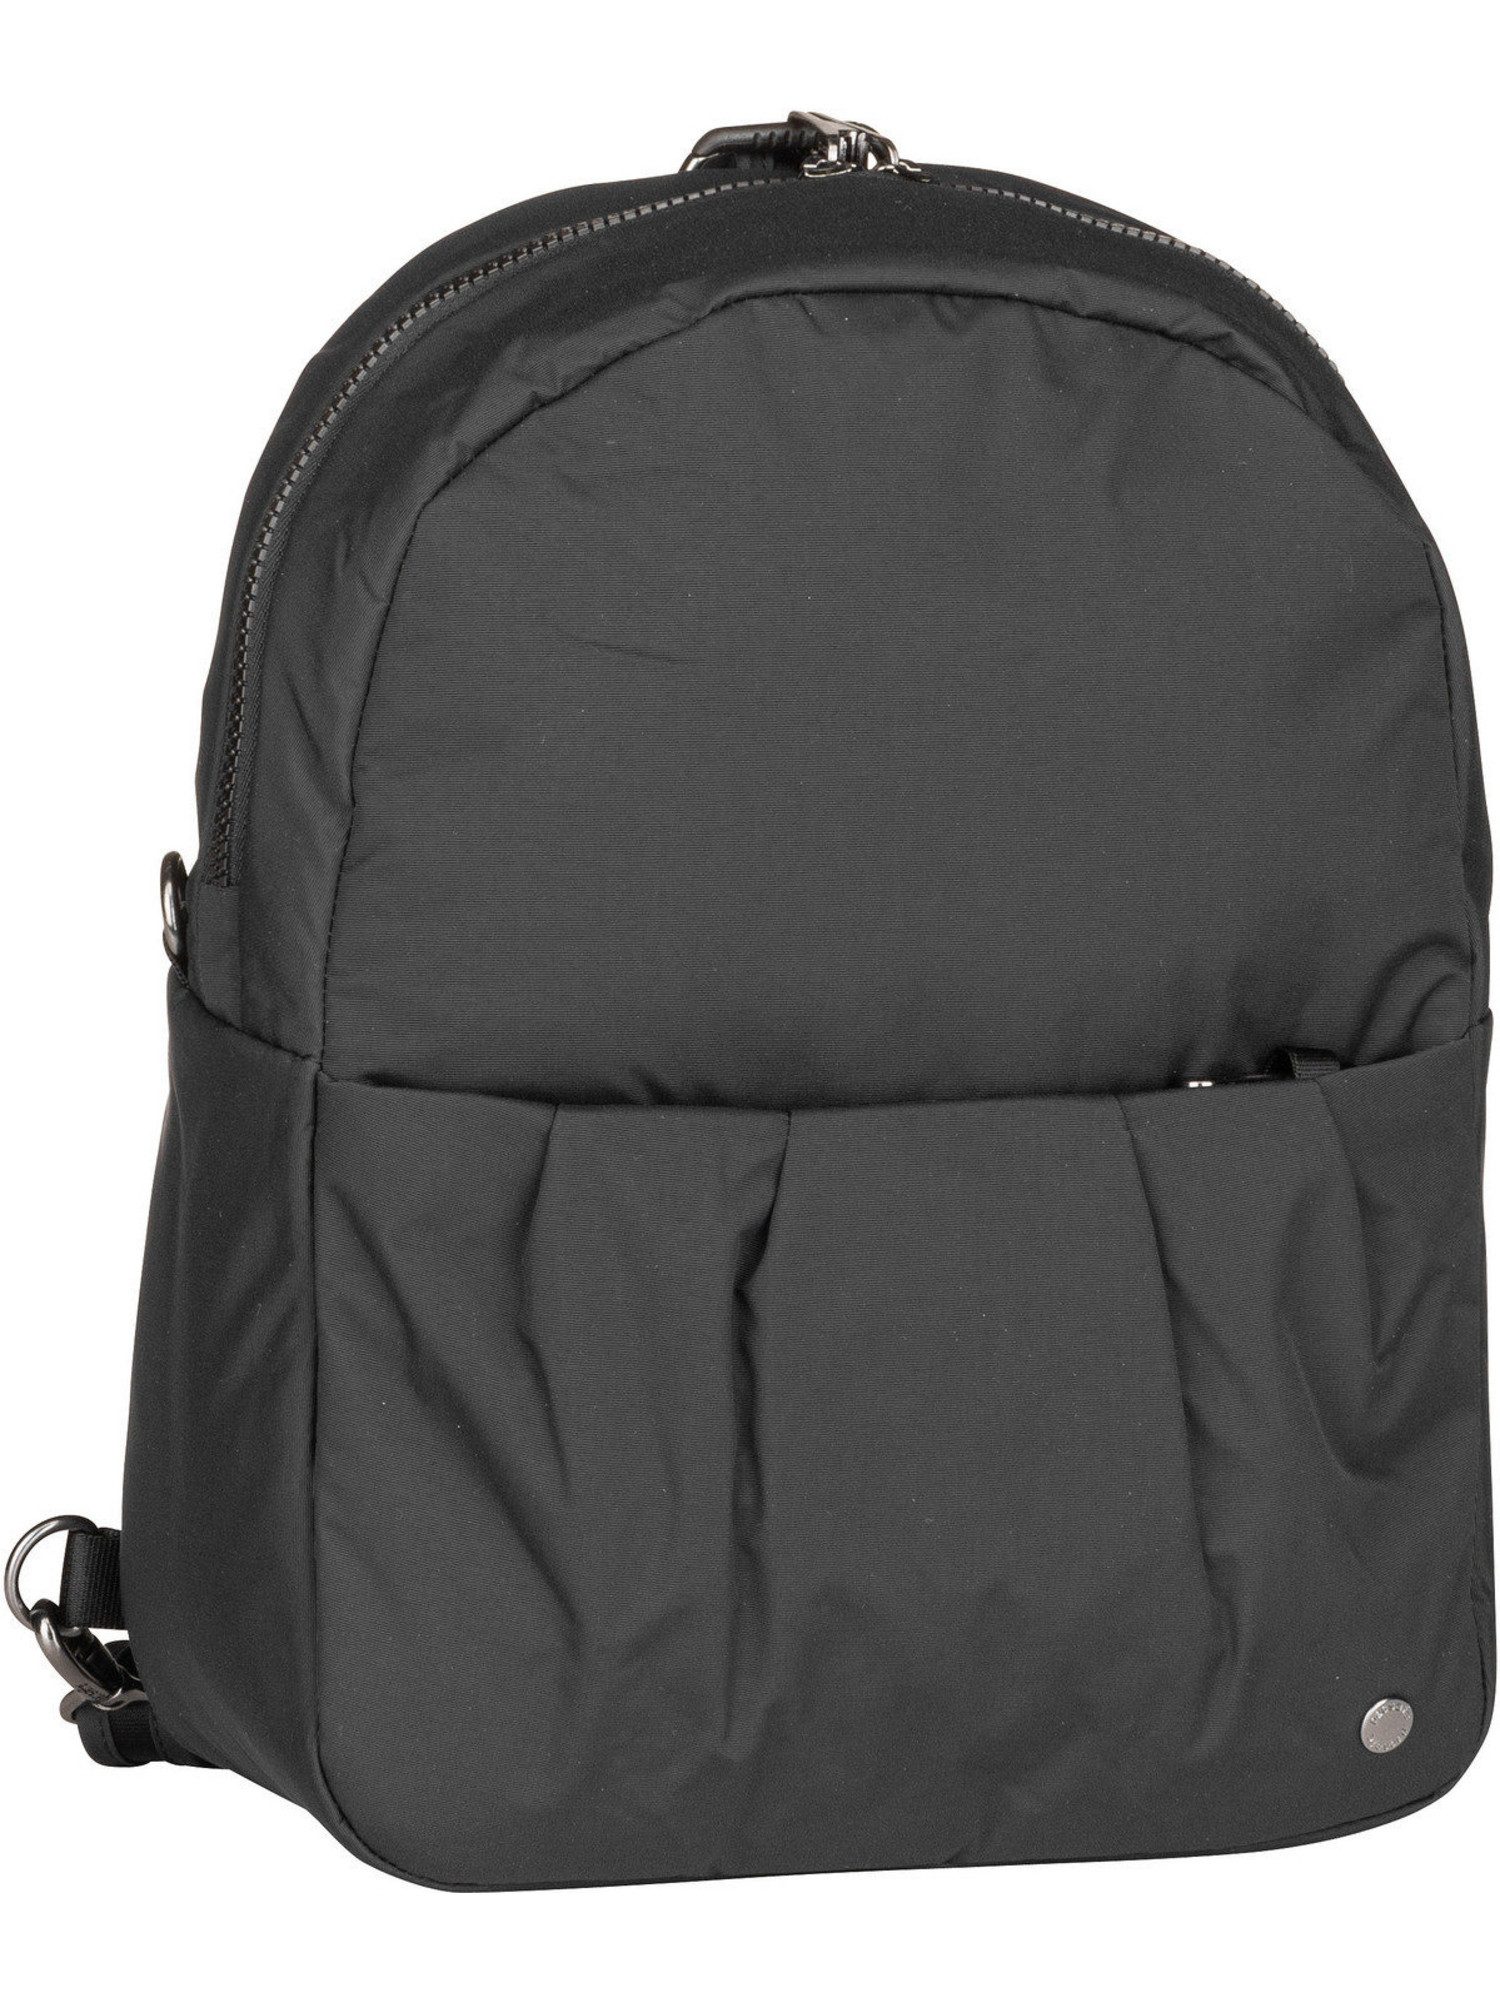 Pacsafe Rucksack CX Convertible Backpack